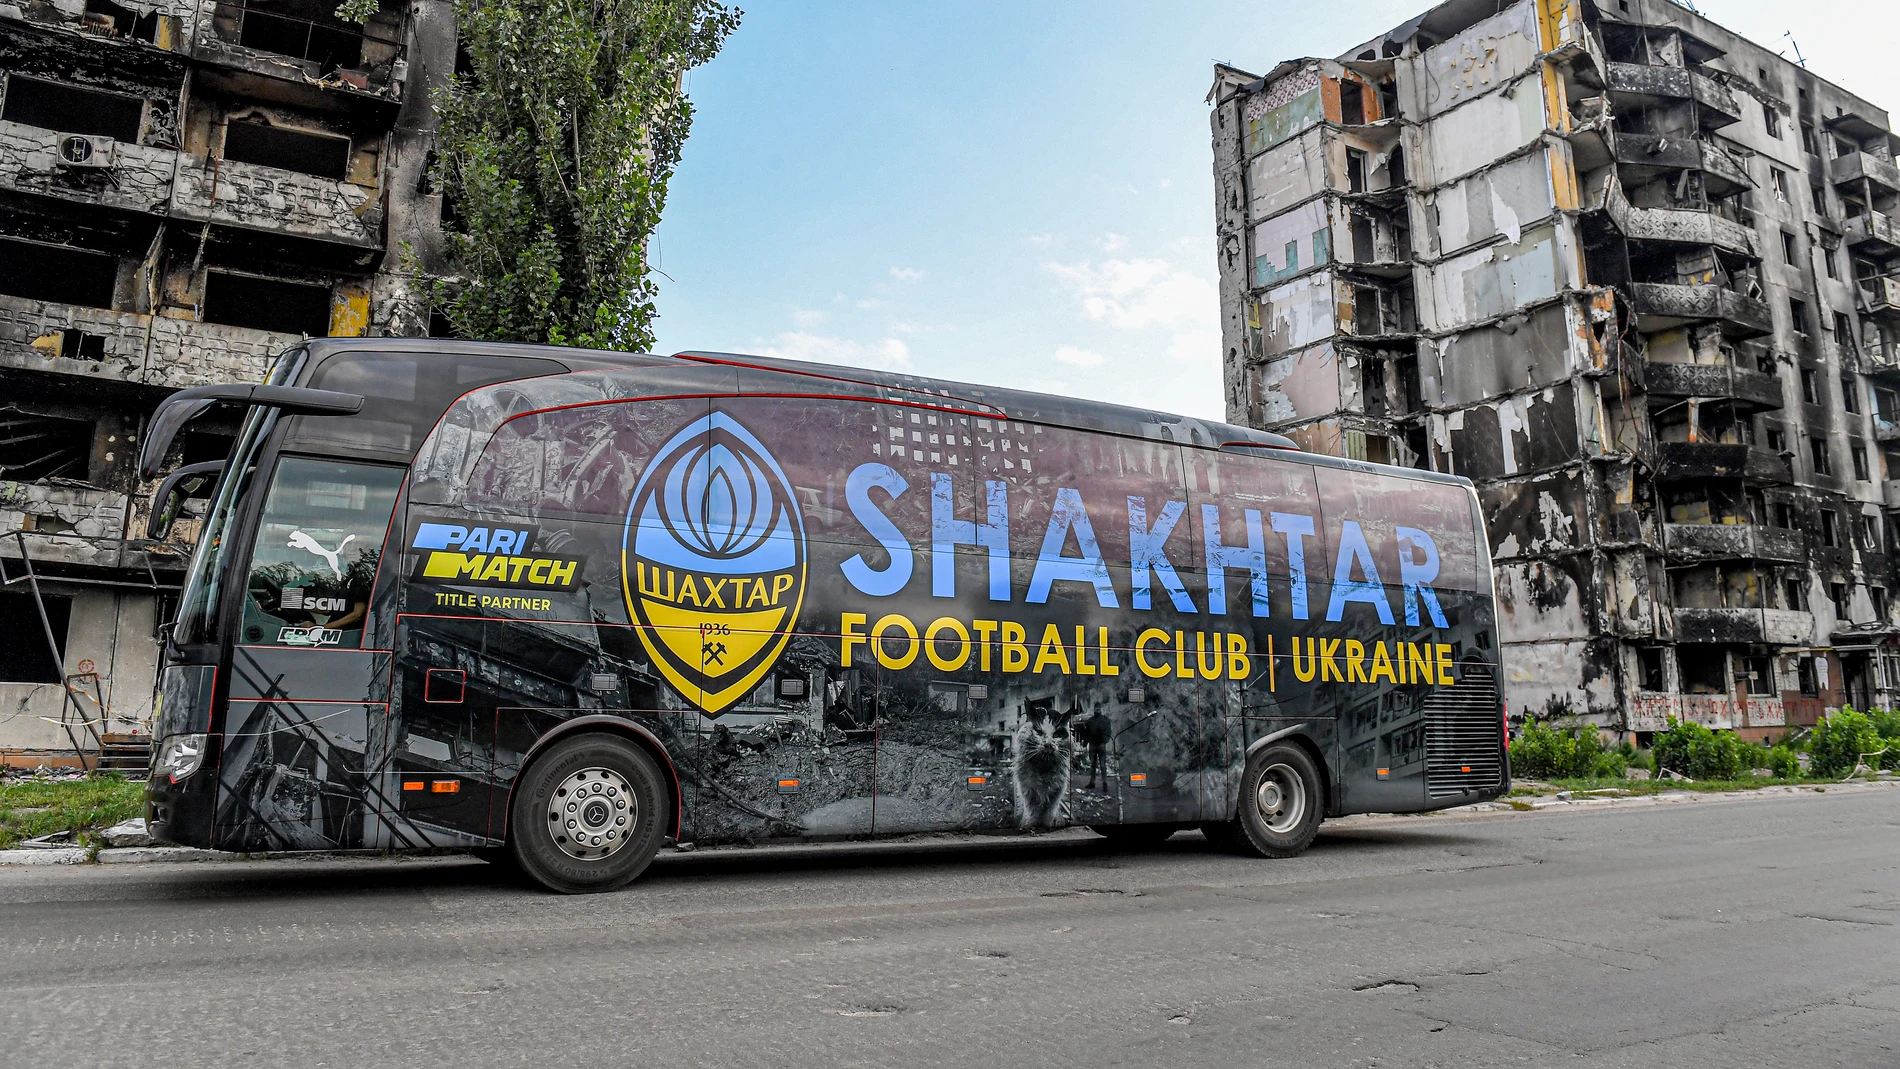 autobus-shakhtar-muestra-crudeza-guerra-kiev_98